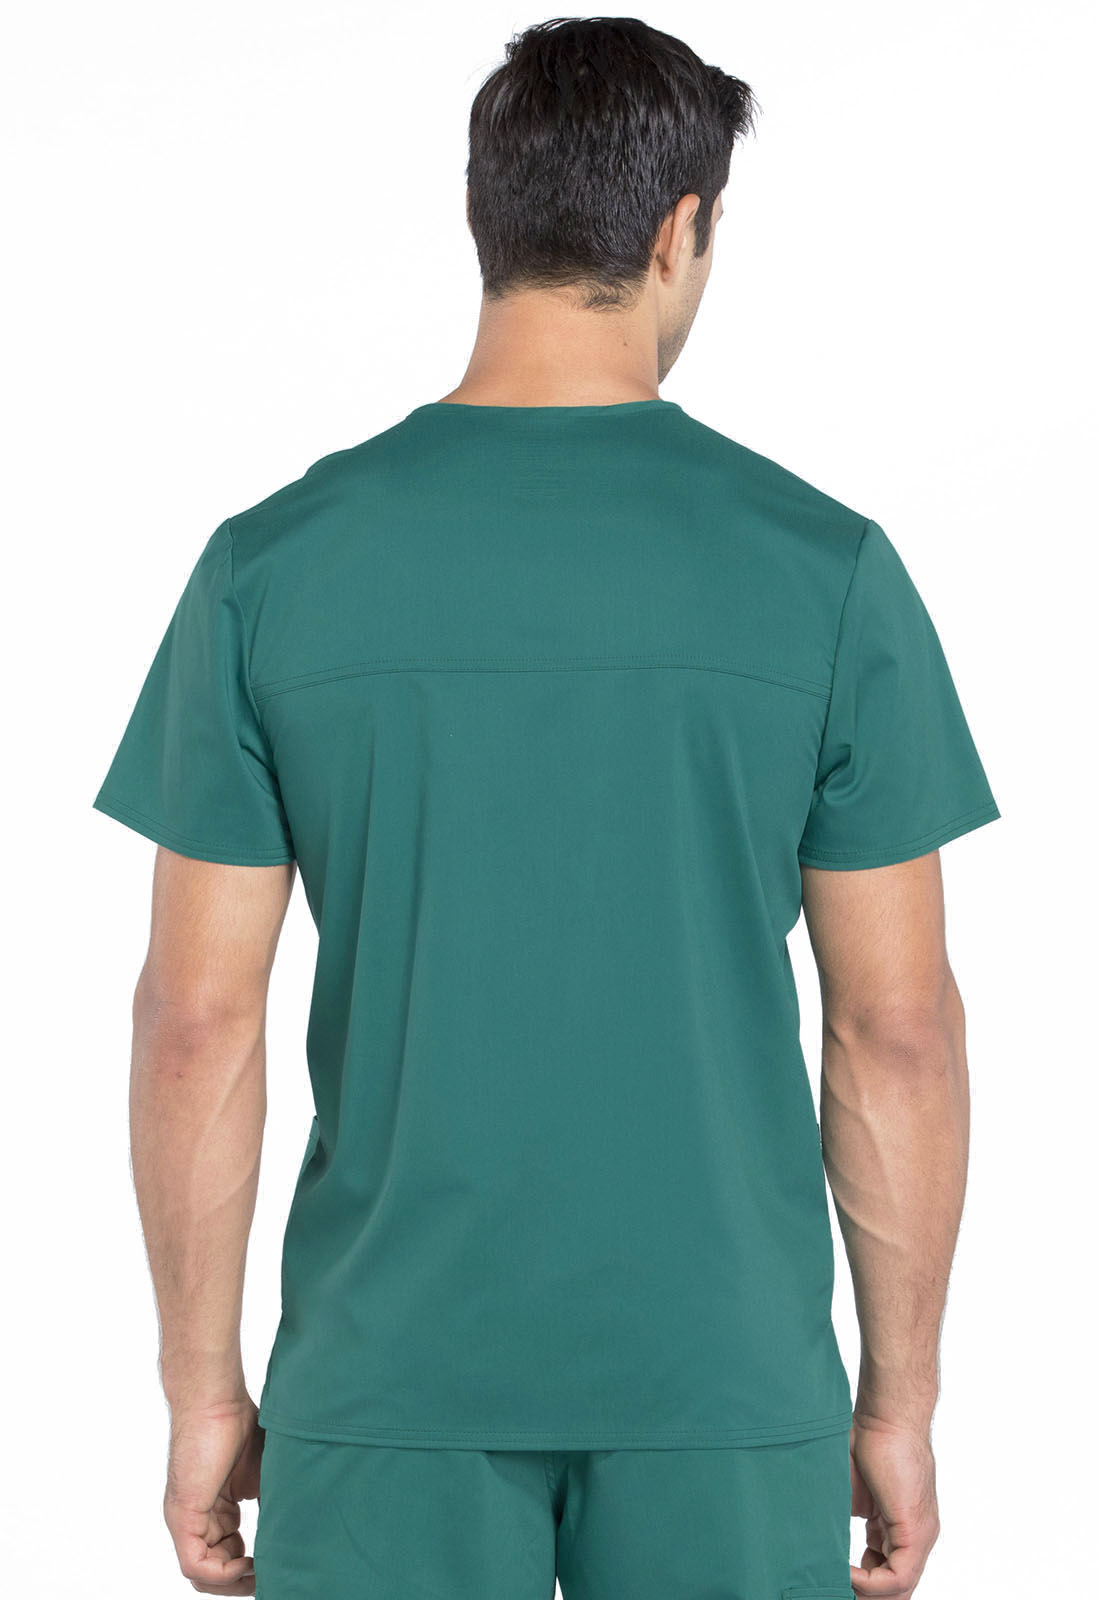 Cherokee Workwear Revolution Scrubs Top for Men V-Neck WW670, XL, Hunter Green - image 4 of 6